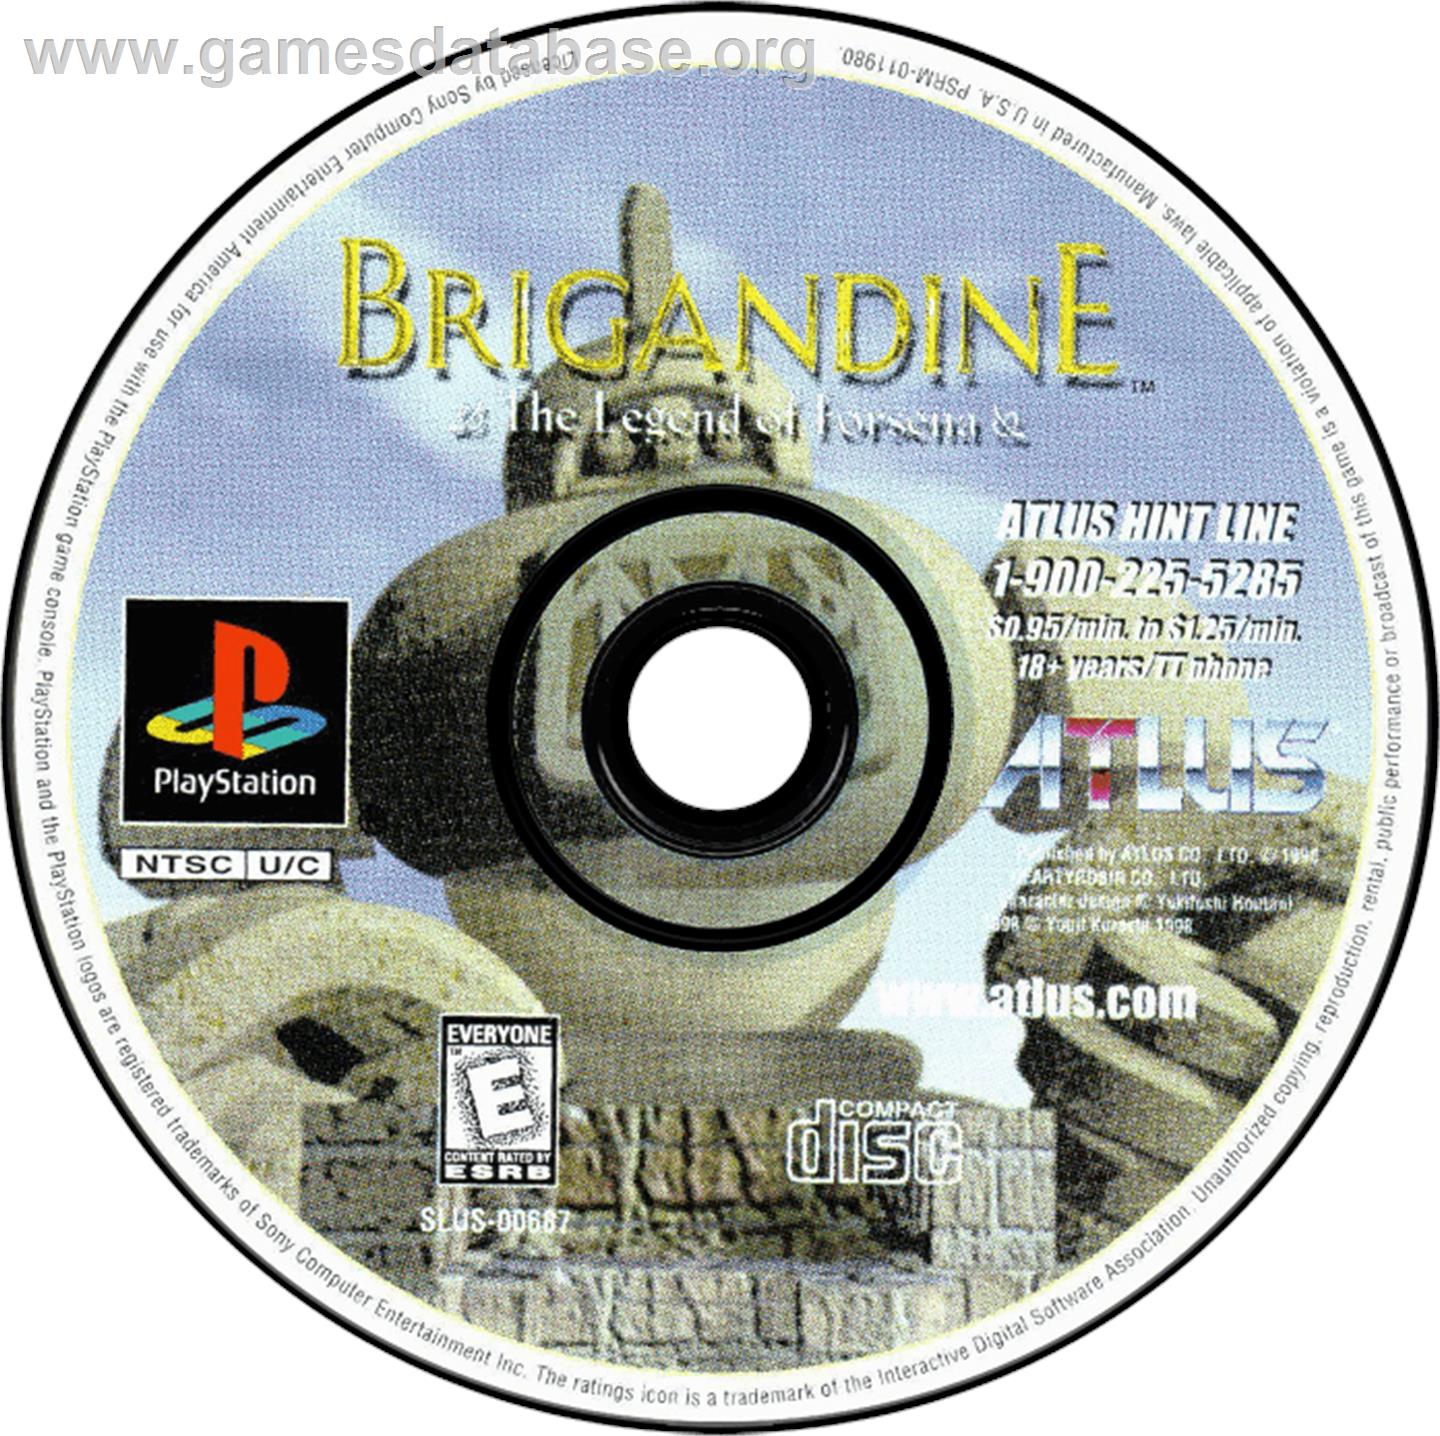 Brigandine: The Legend of Forsena - Sony Playstation - Artwork - Disc